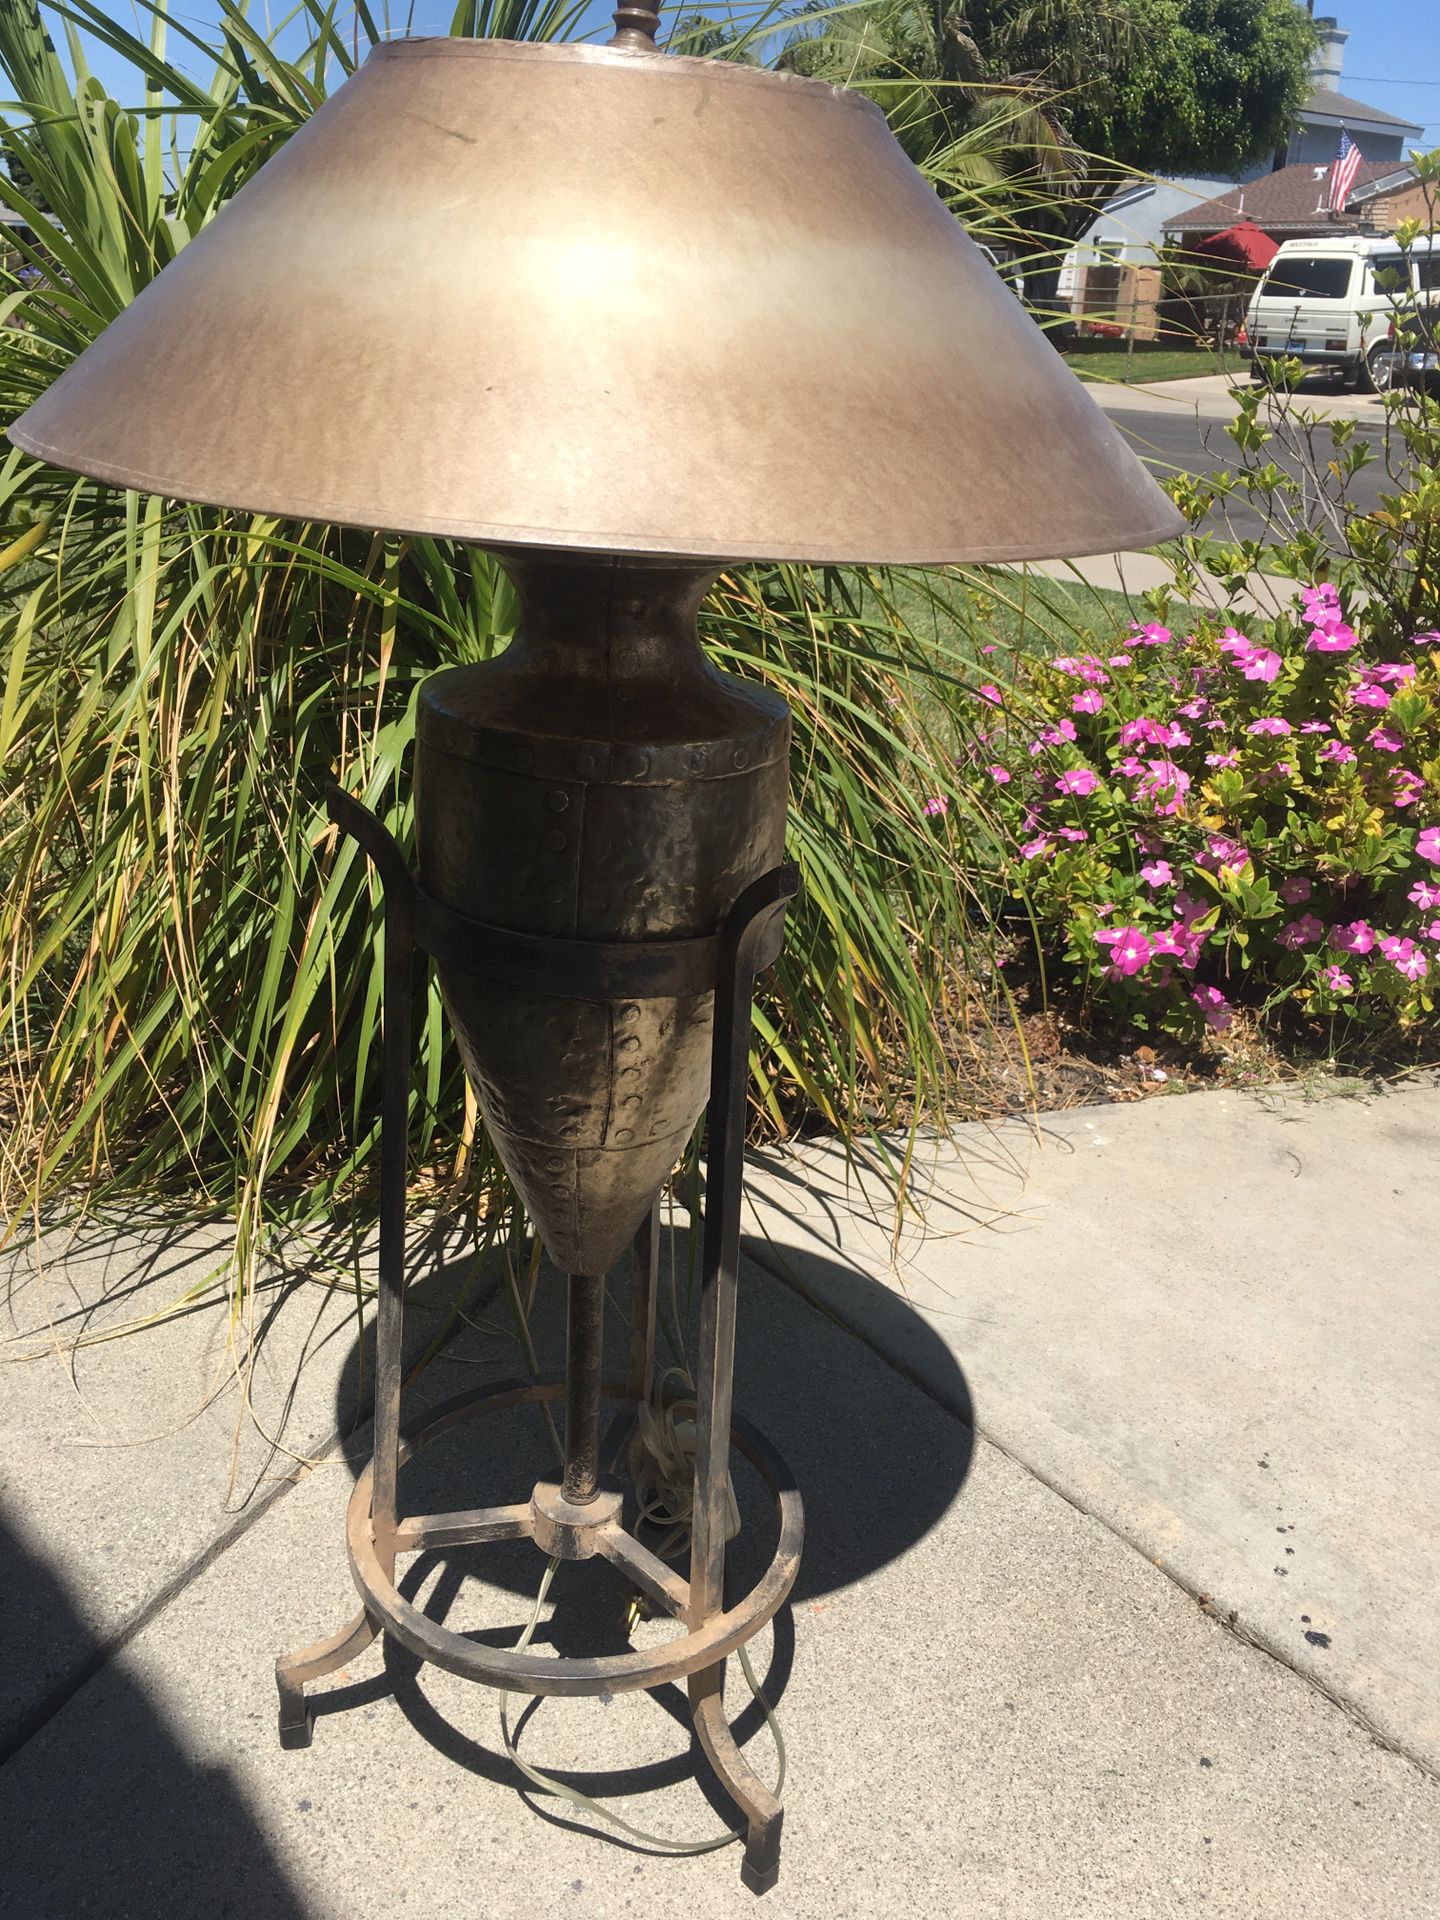 VERY EXPENSIVE SUPER UNIQUE LAMP